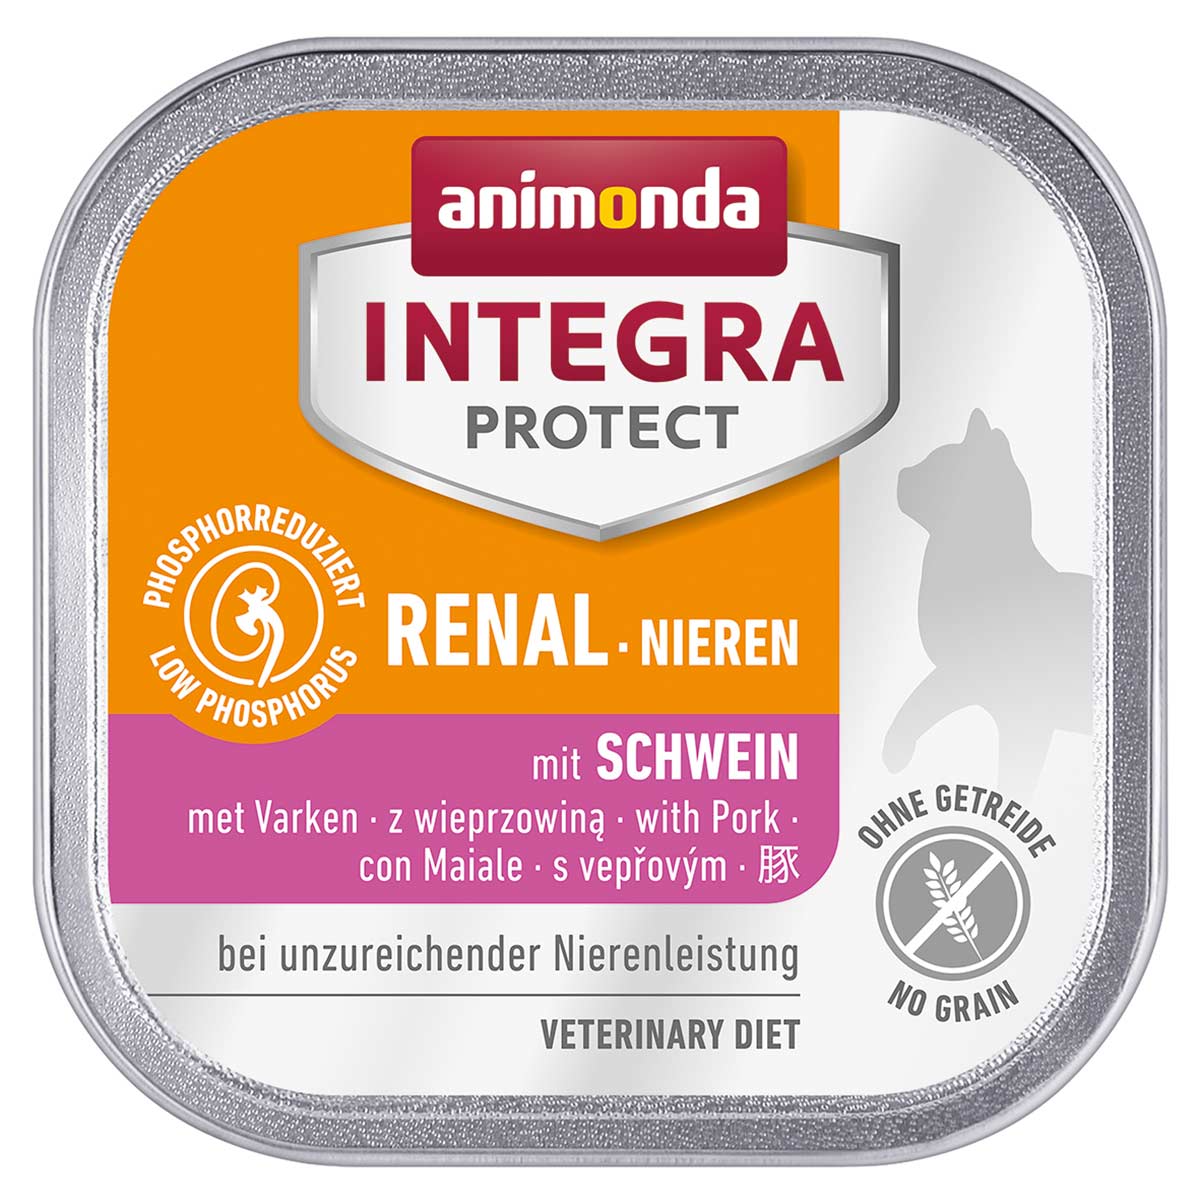 animonda INTEGRA PROTECT Renal mit Schwein 32x100g von animonda Integra Protect